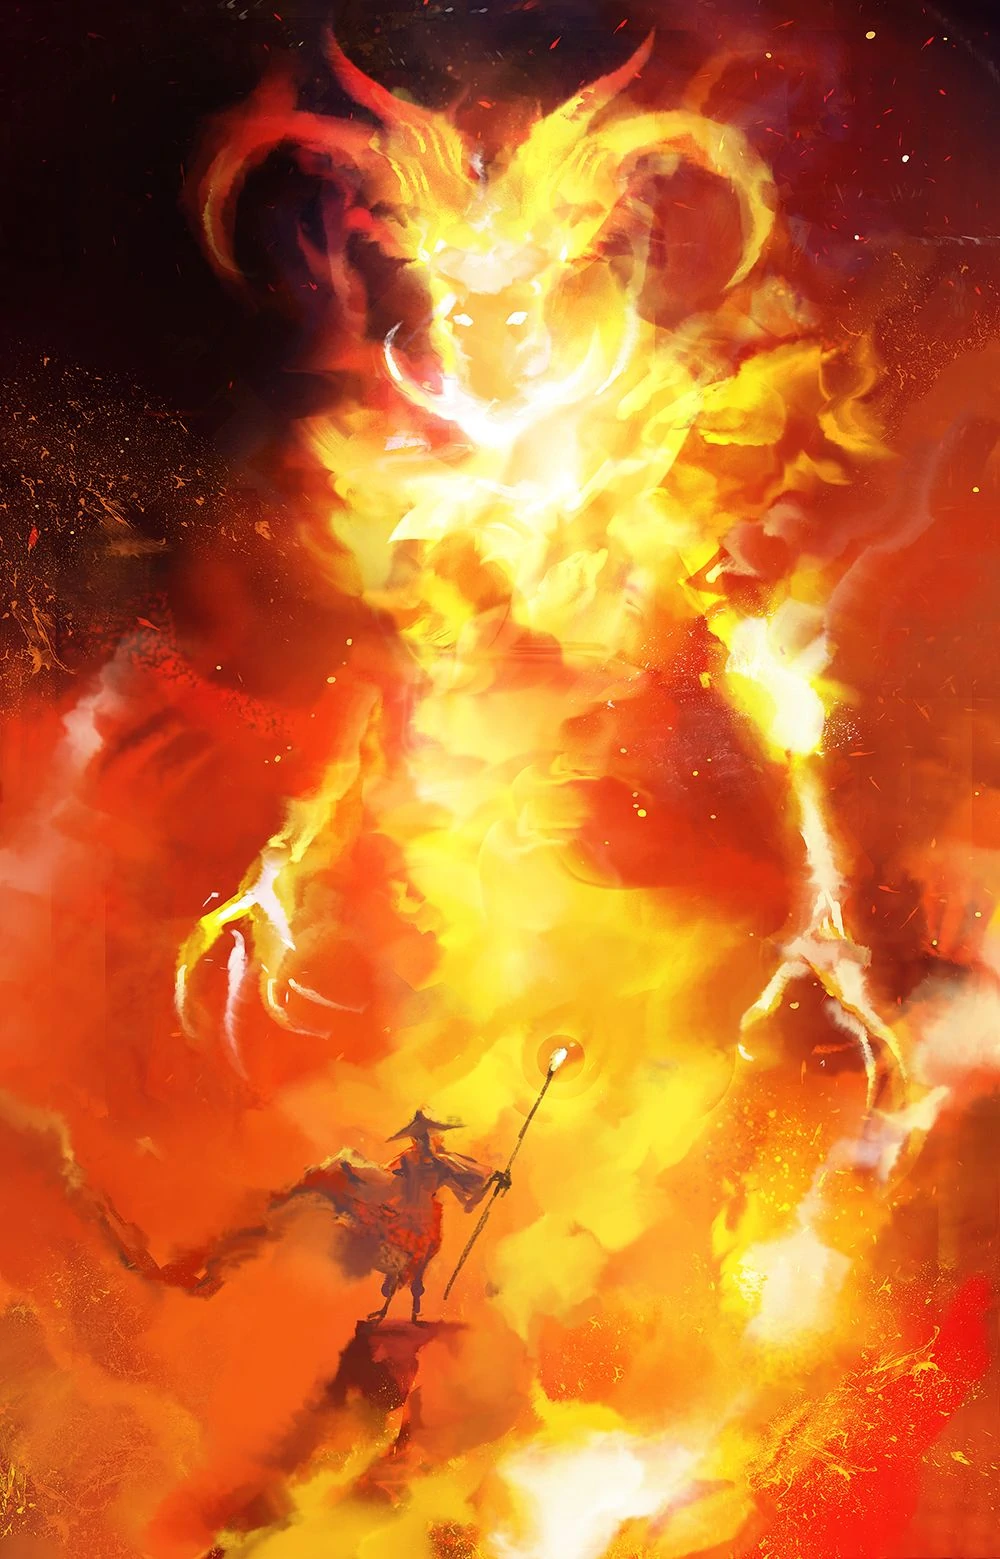 Fire elemental. Огненный Элементаль ДНД 5. Огненный Элементаль ДНД. DND Элементаль огня. Элементаль арканы.